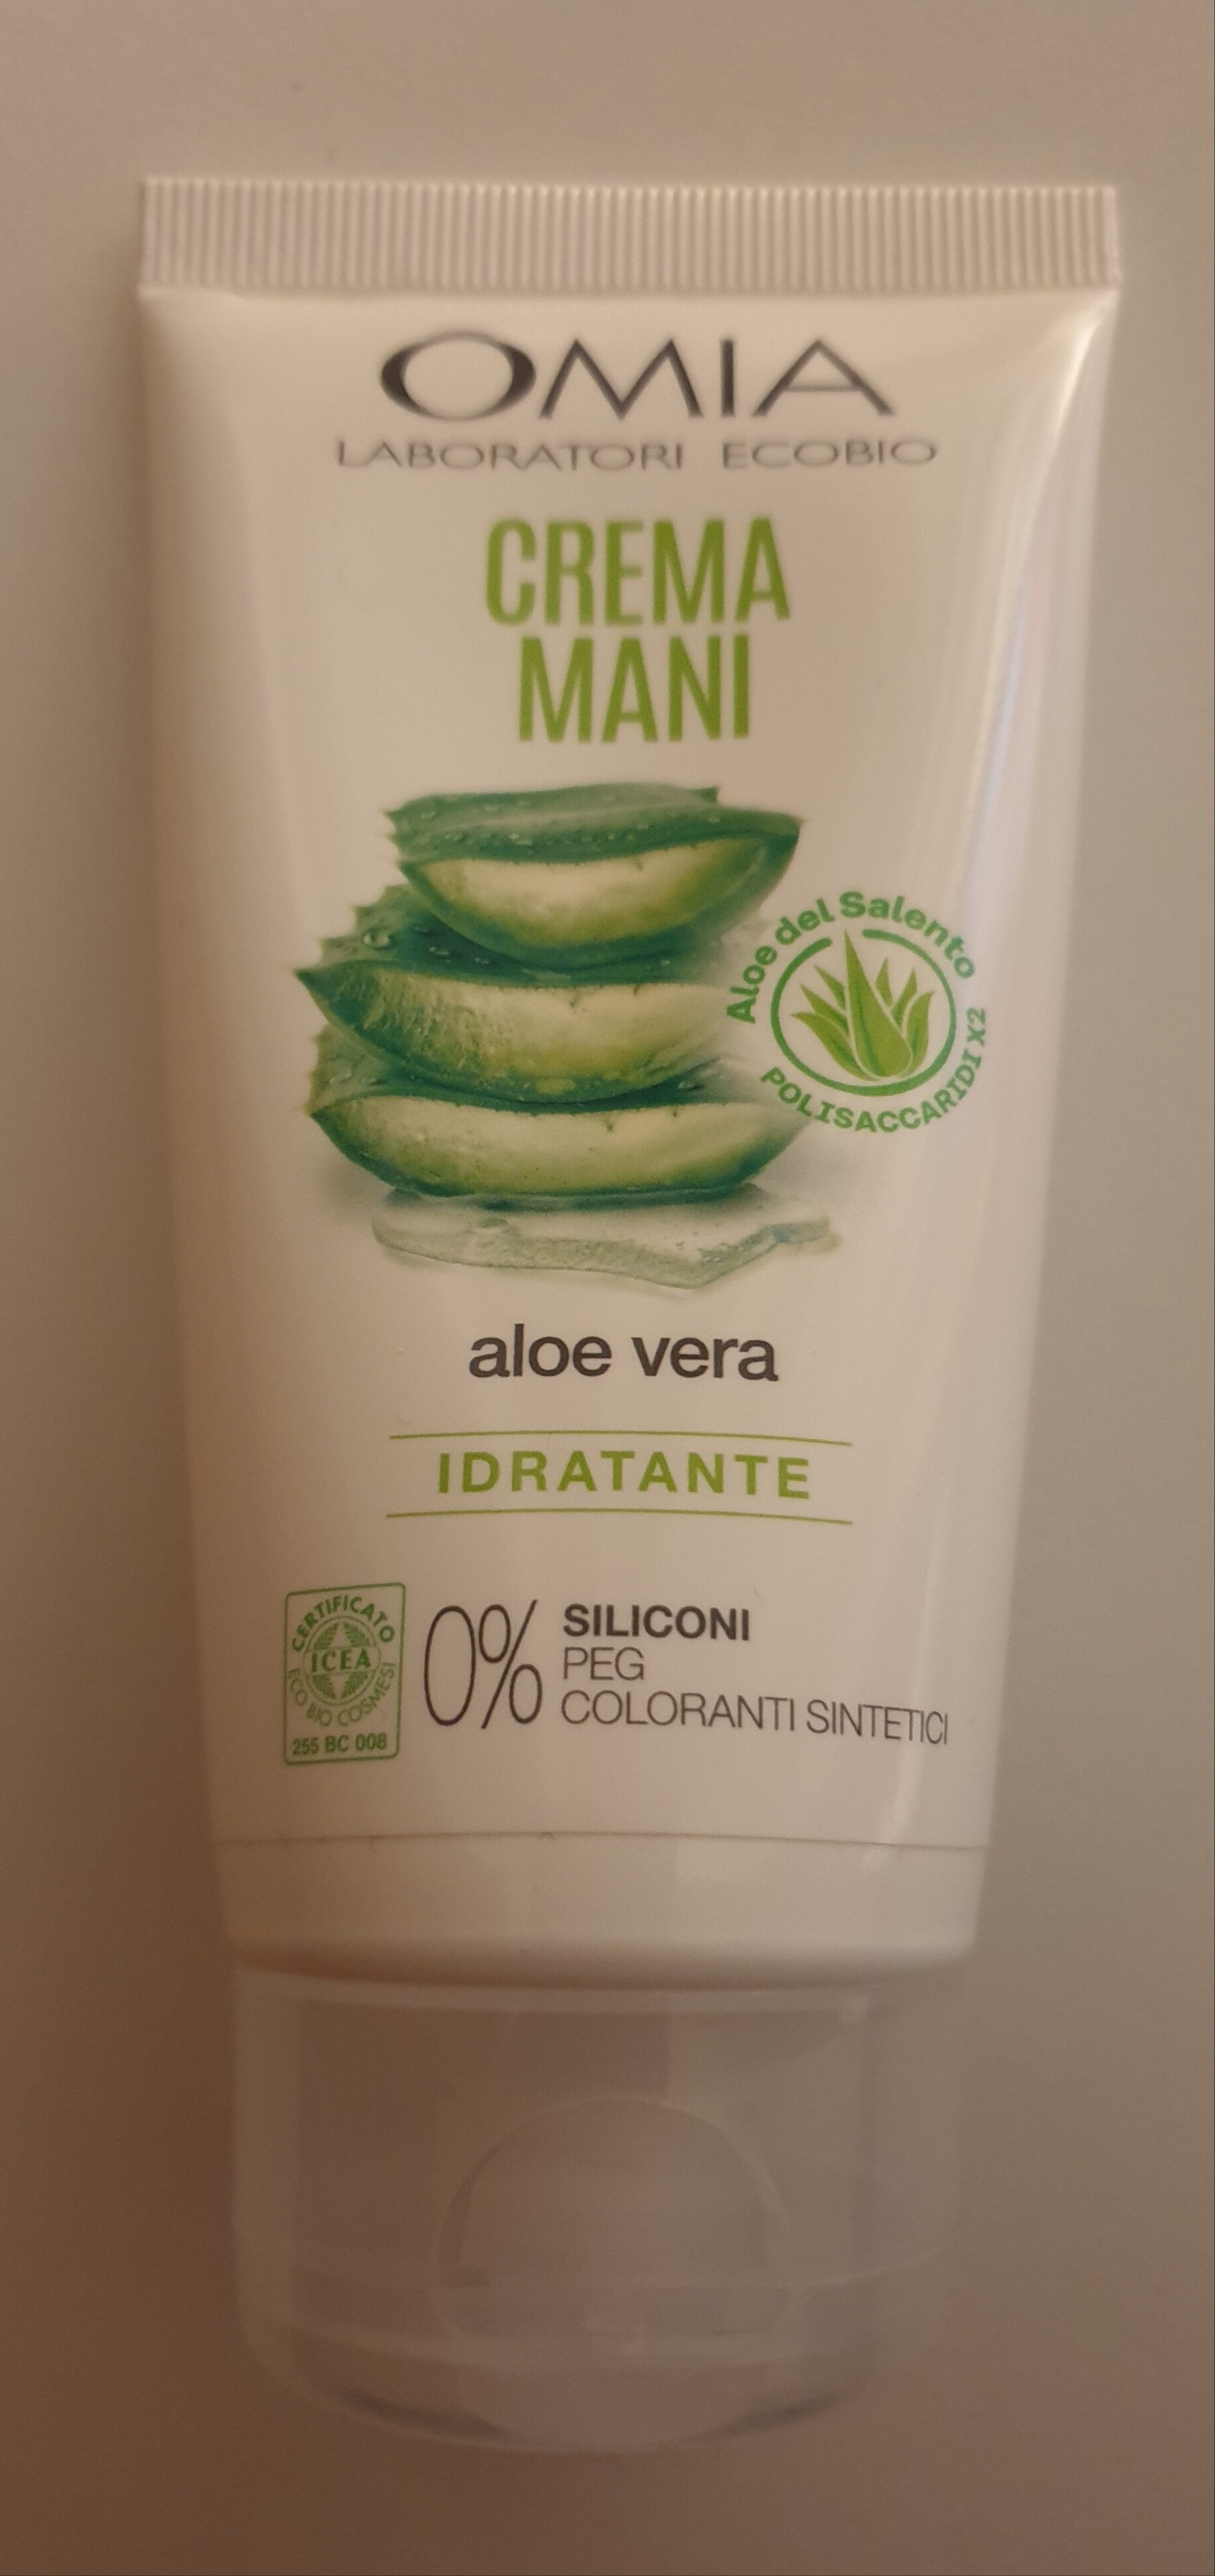 Crema mani aloe vera - उत्पाद - it